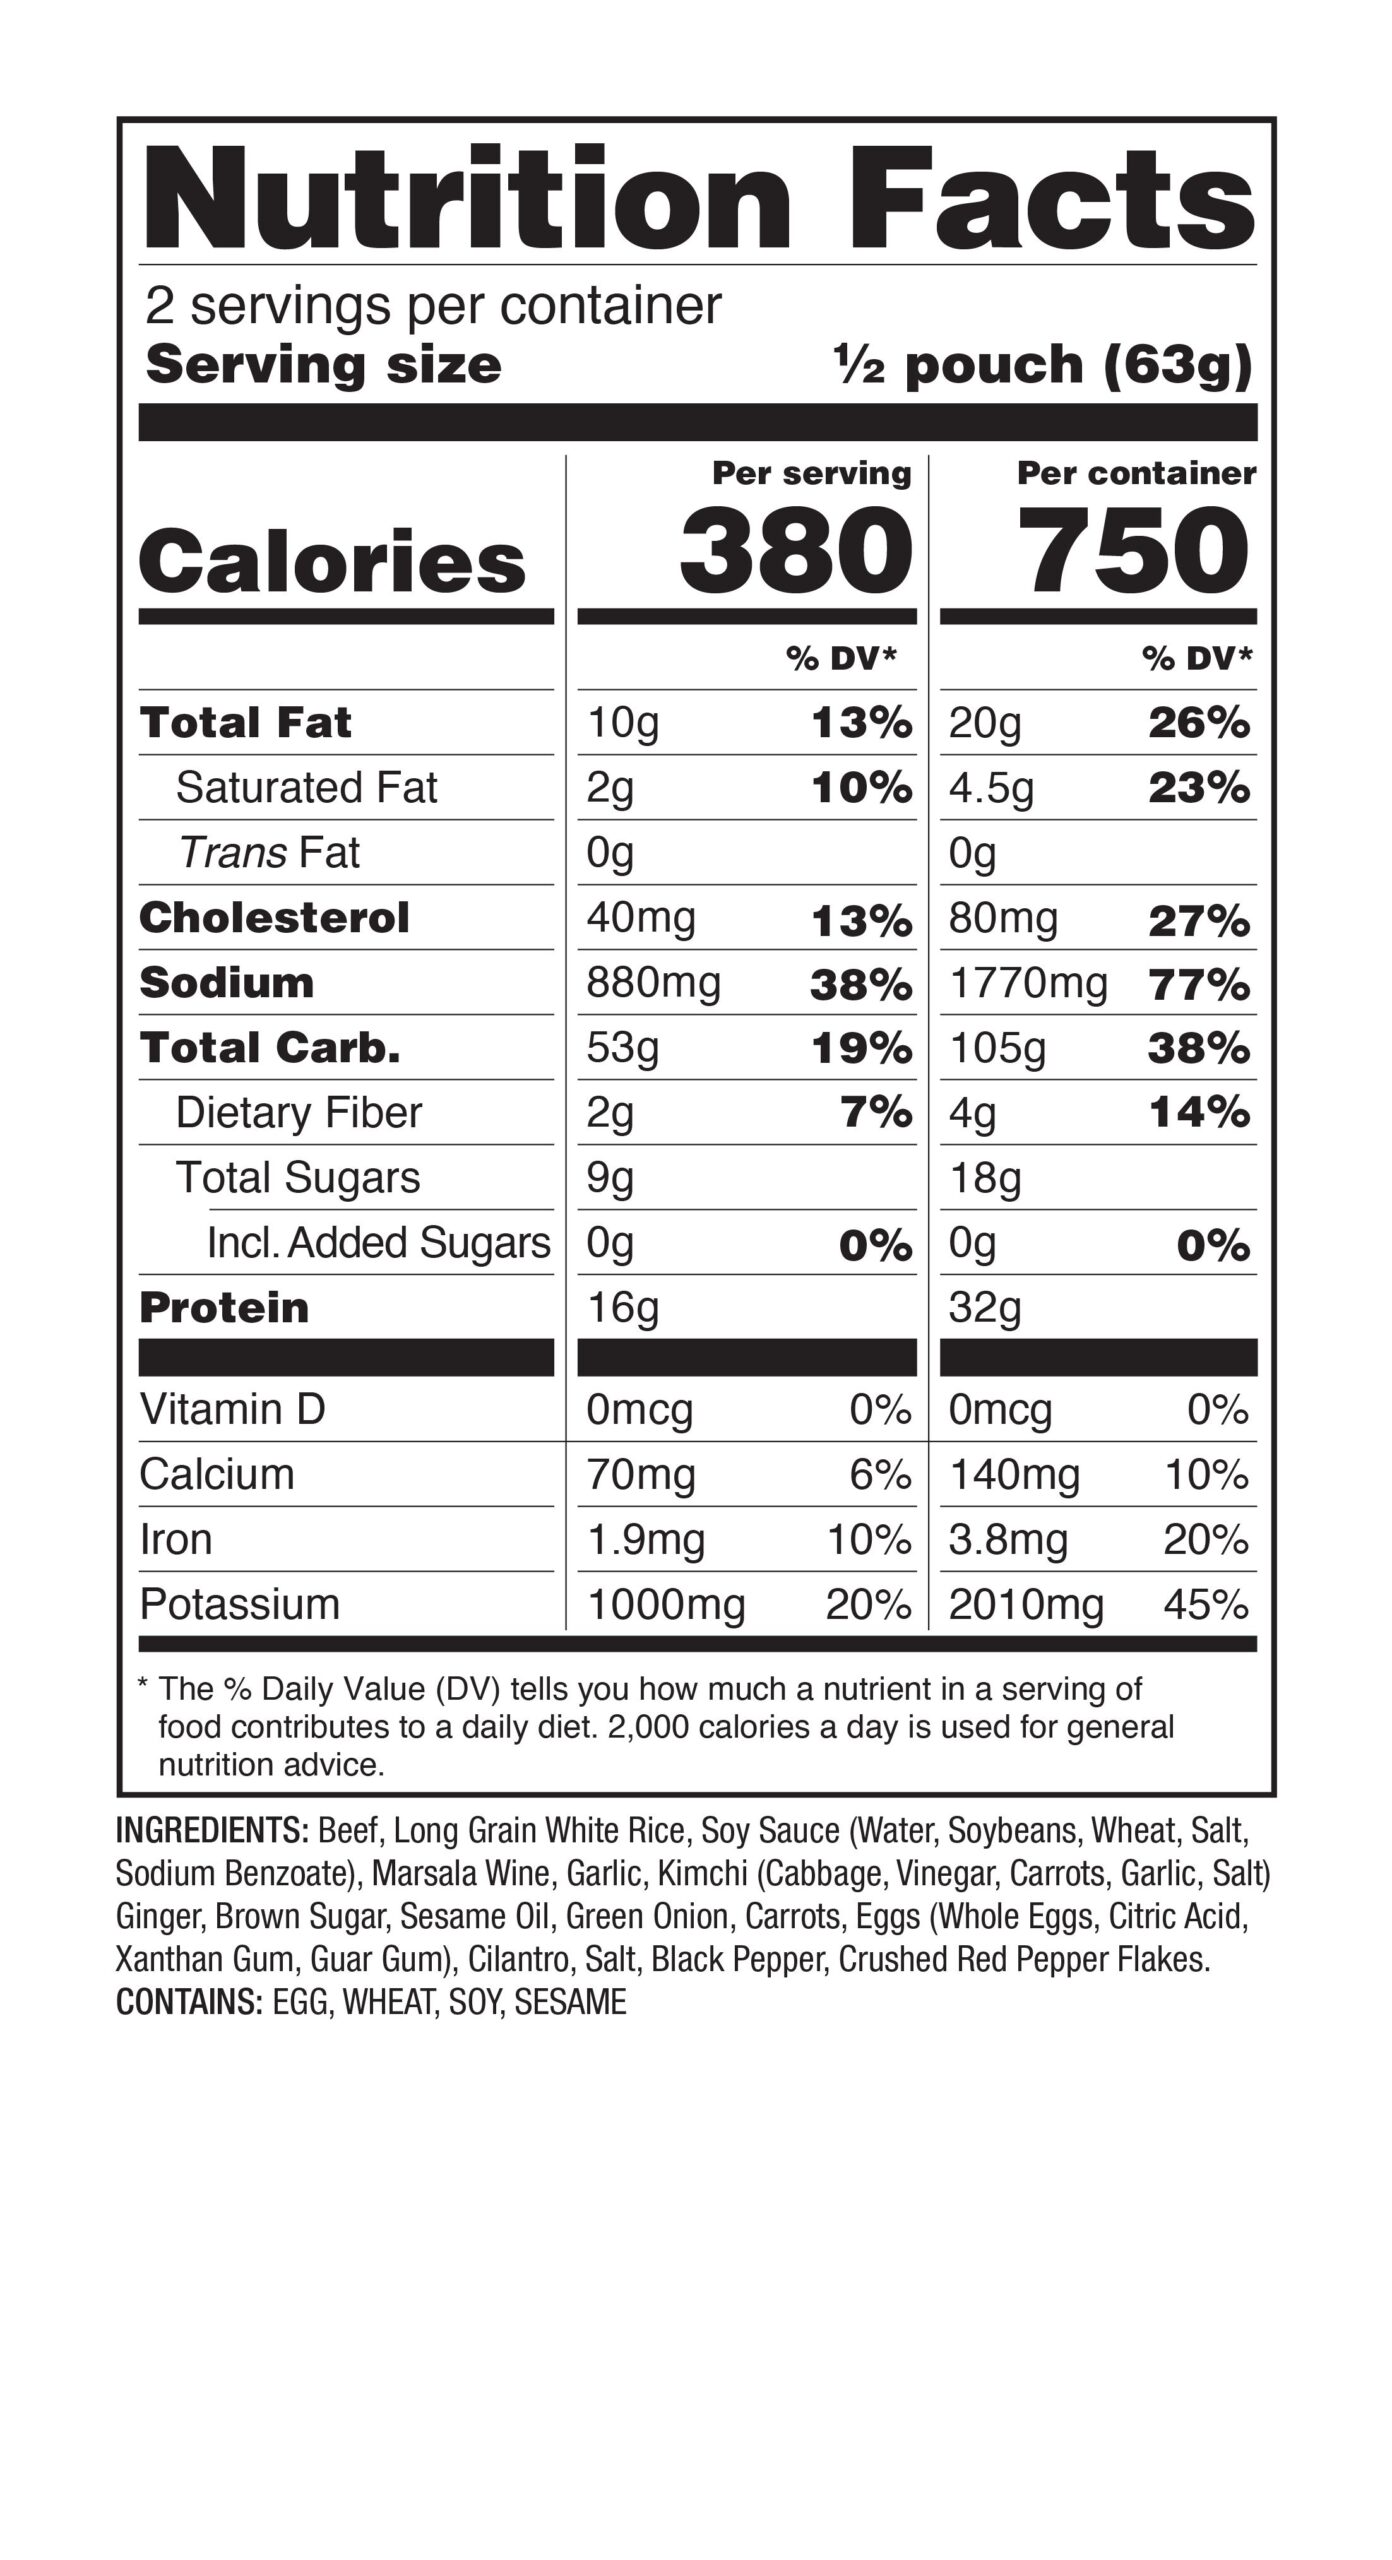 A nutrition label for an emergency food storage protein powder.